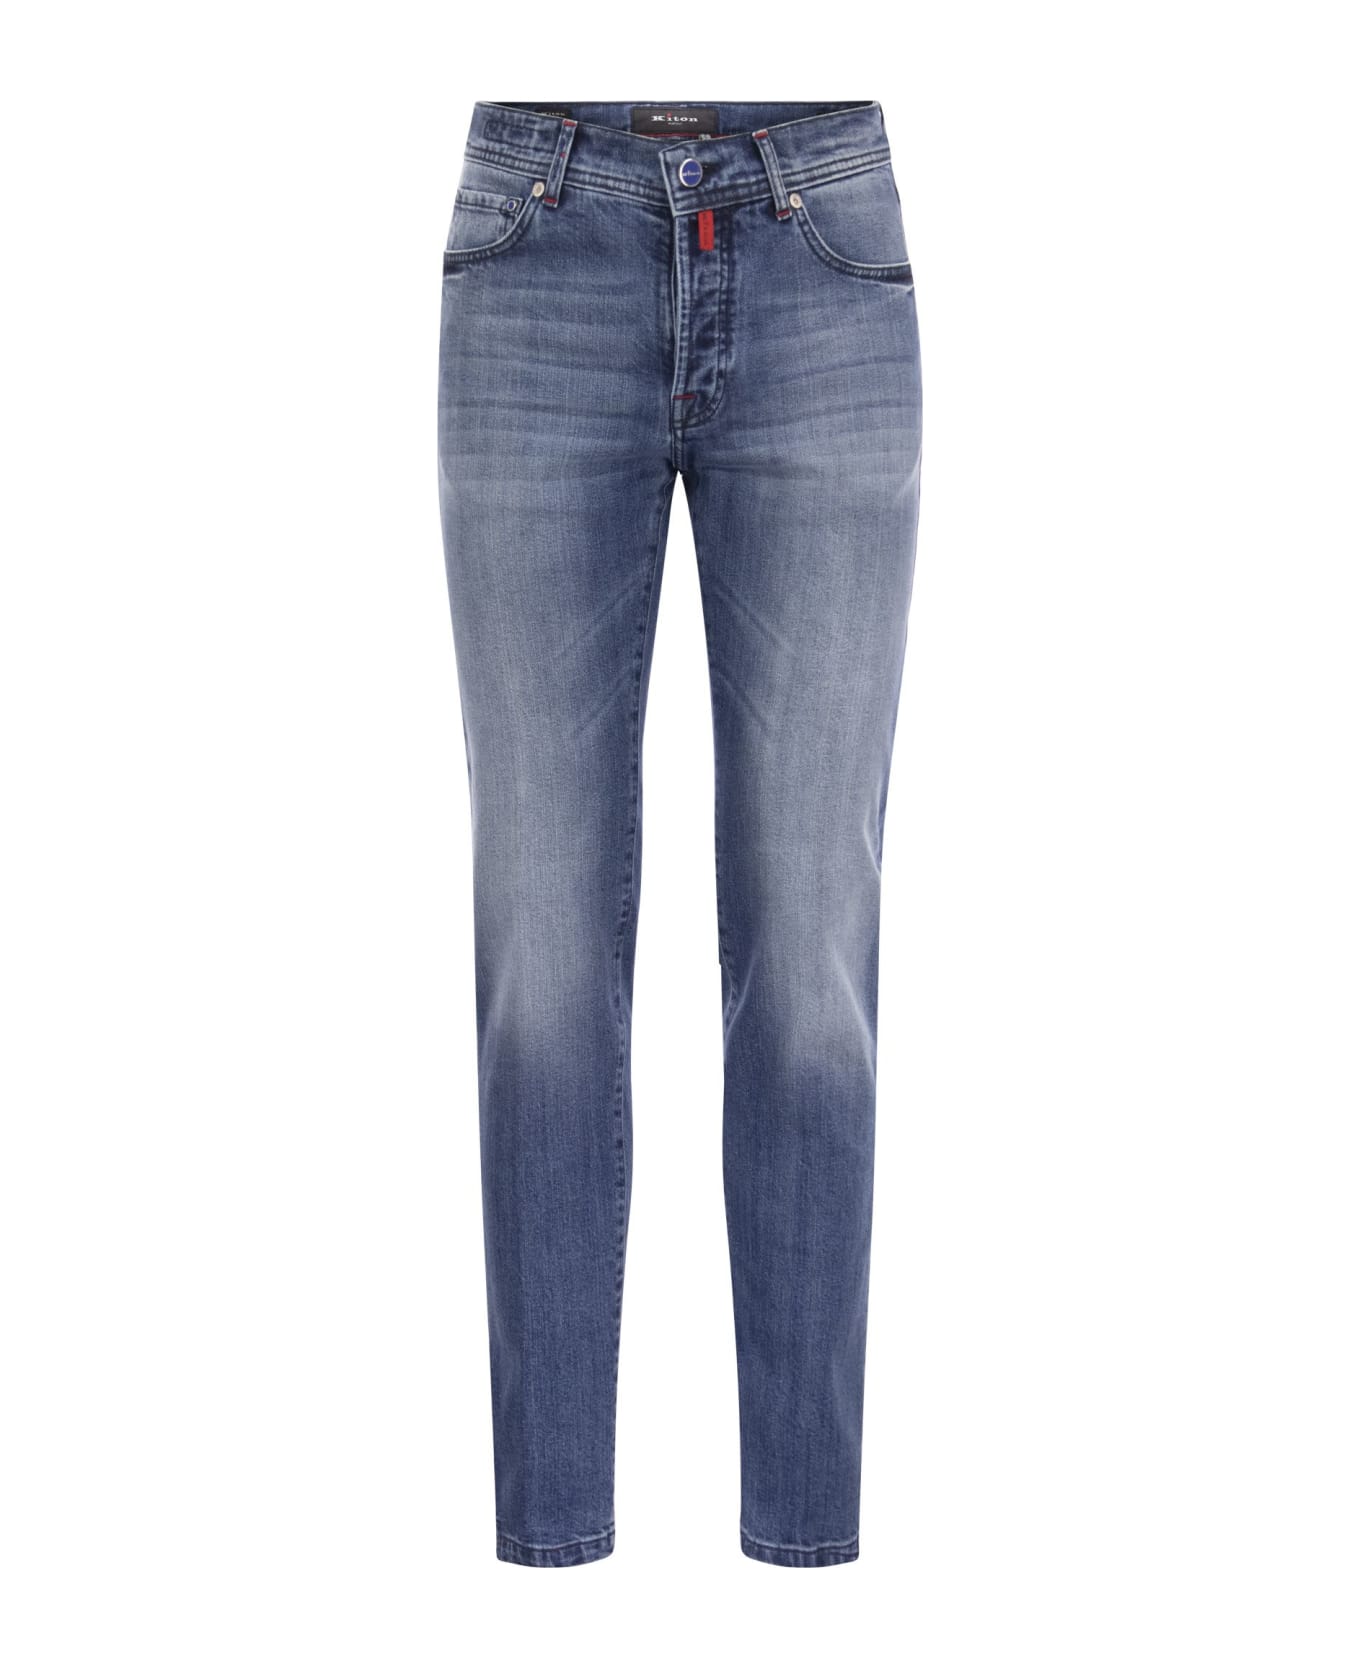 Kiton 5-pocket Cotton Jeans - Medium Denim